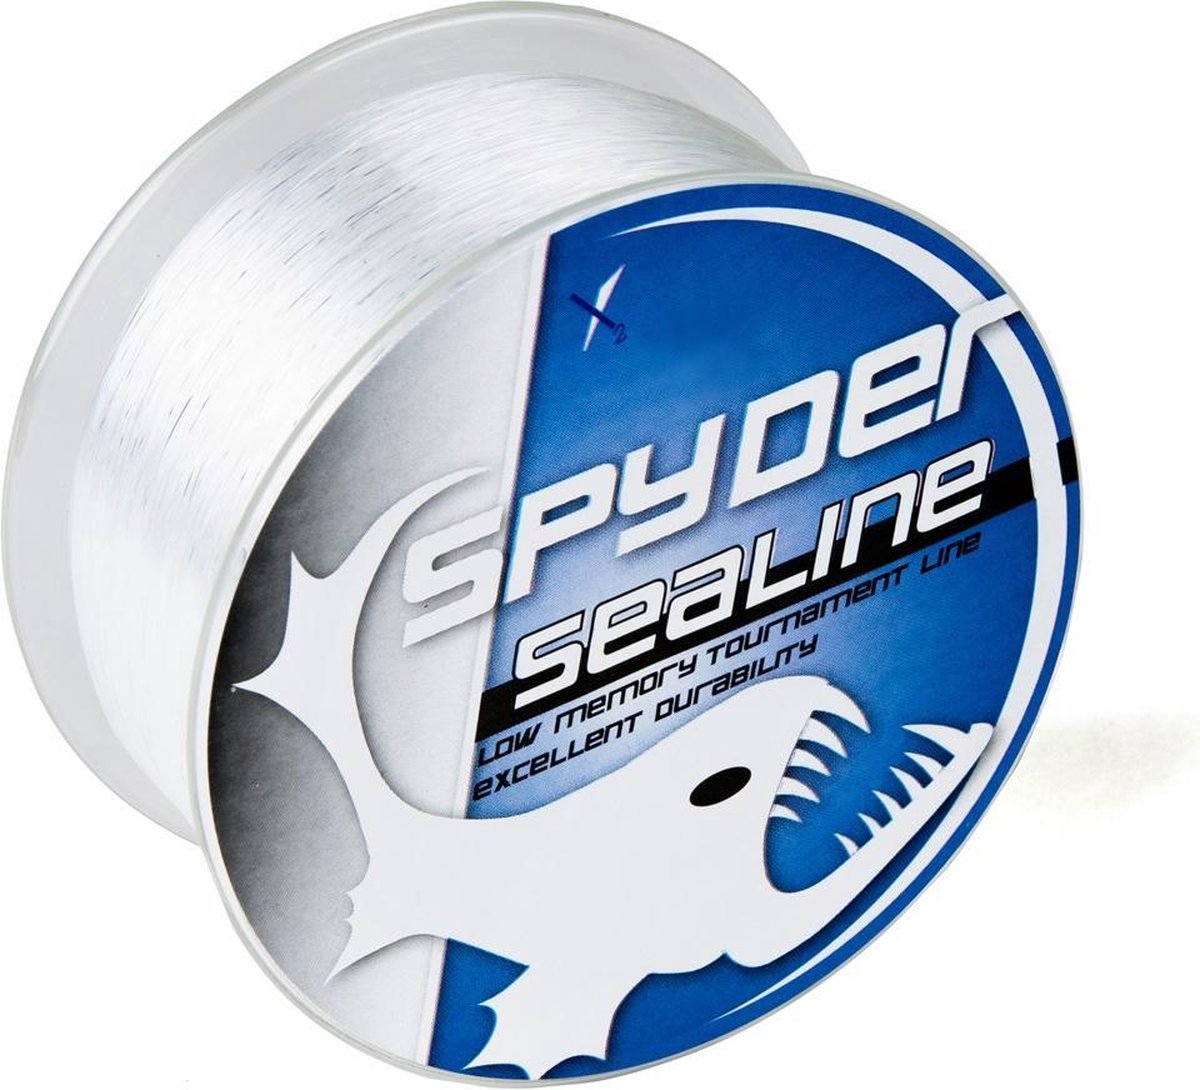 X2 Spyder Sealine - Nylon Vislijn - - 300m bol.com